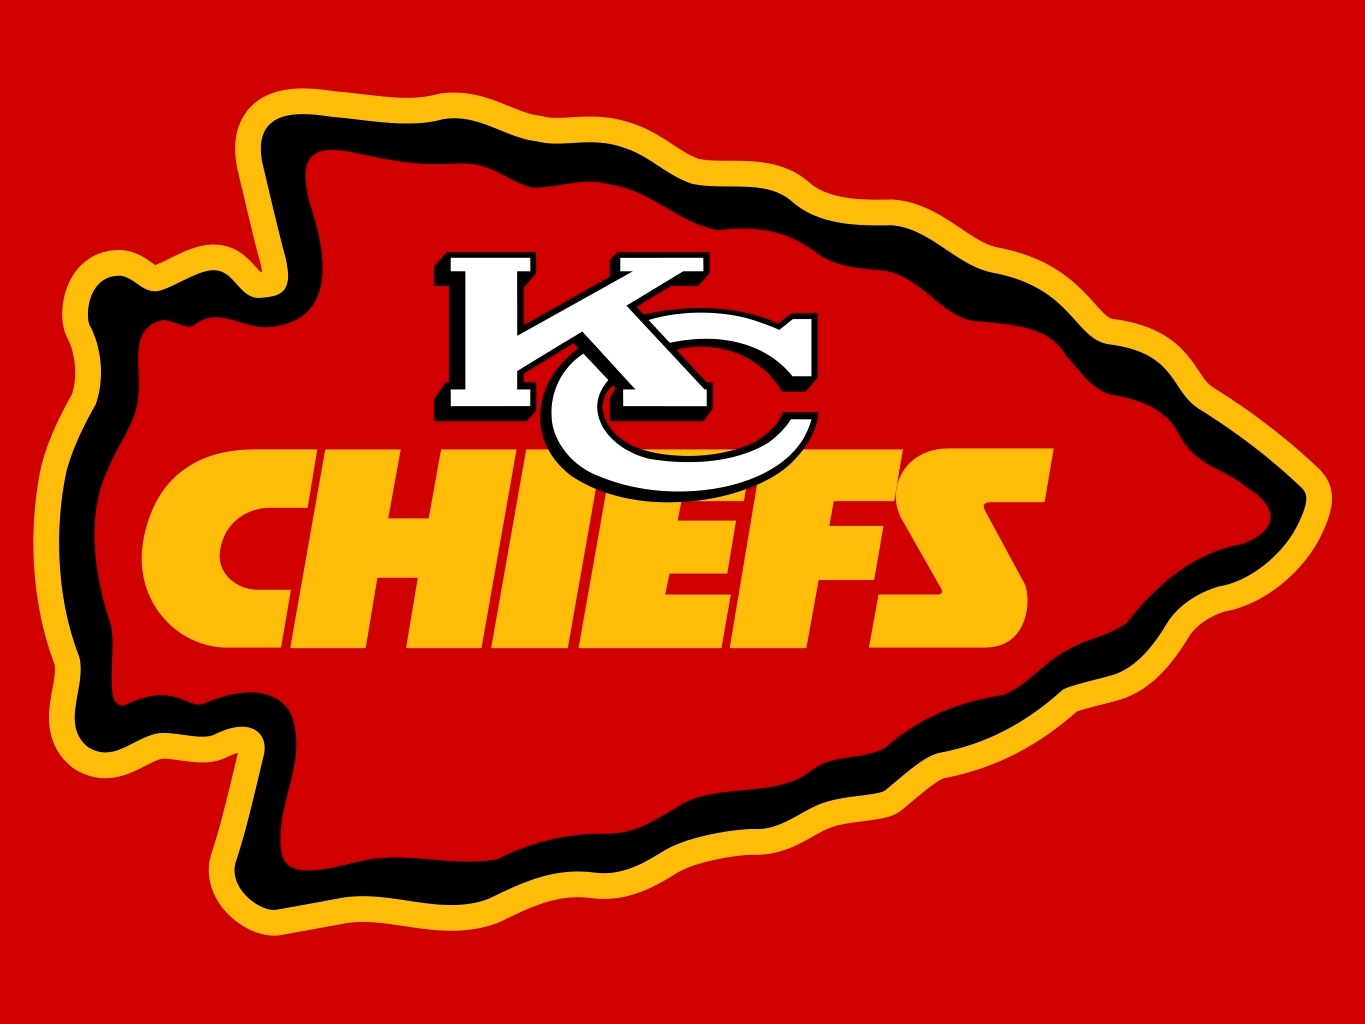 Kansas City Chiefs Backgrounds On Wallpapers Vista - Red Kc Chiefs Logo